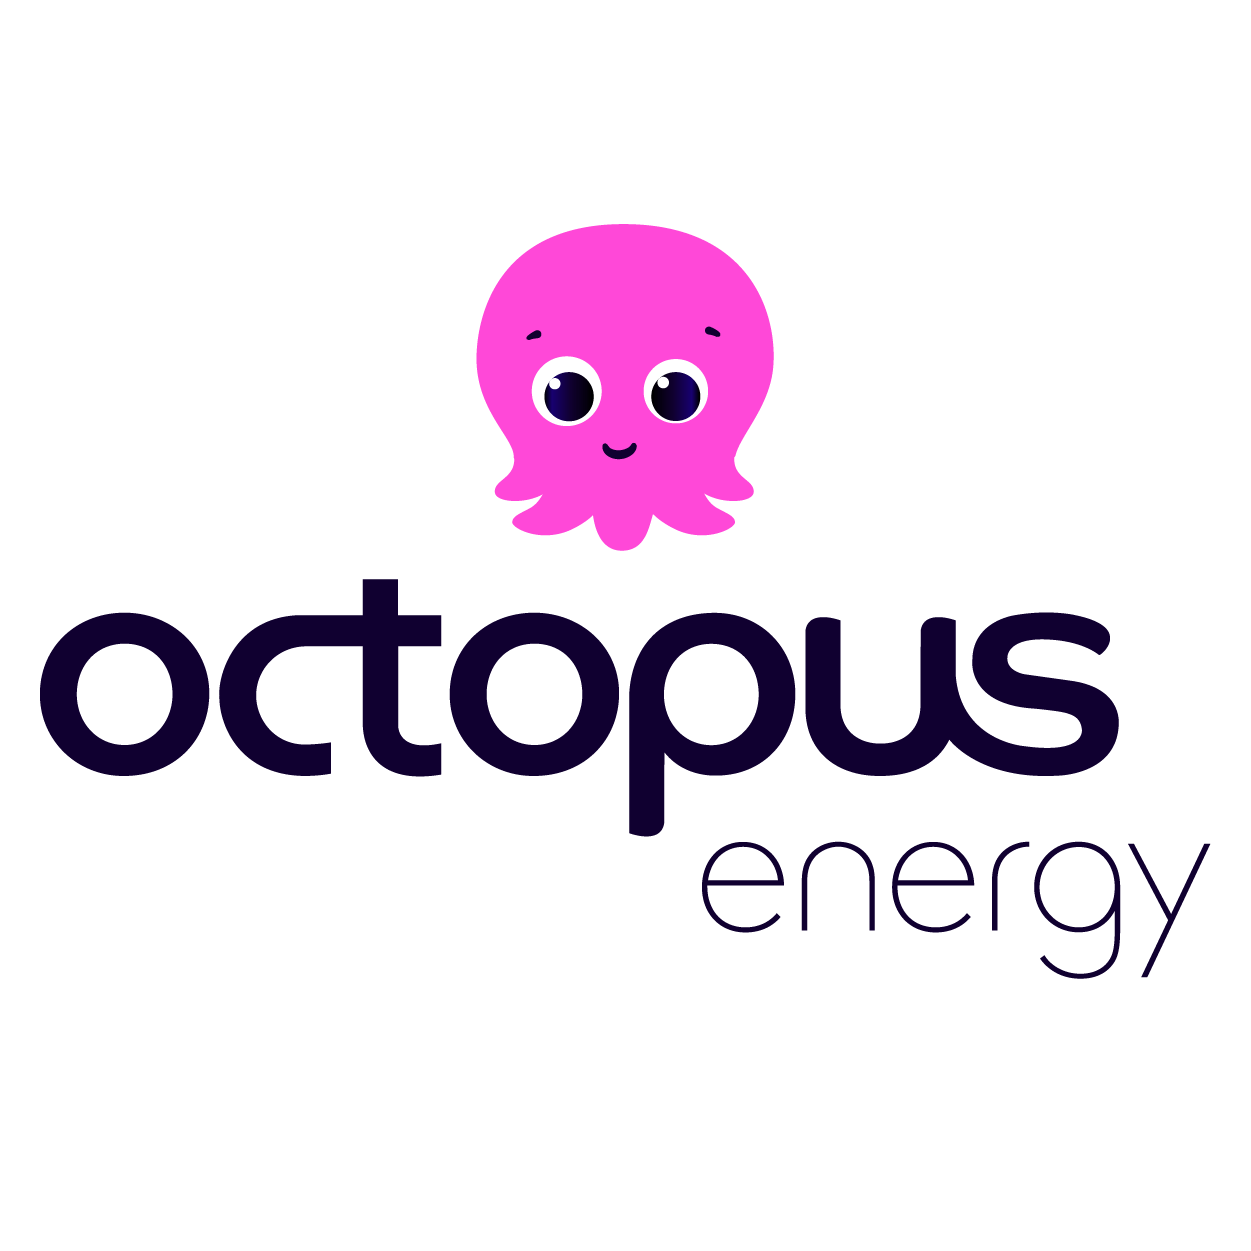 Octopus Energy | Manchester Digital